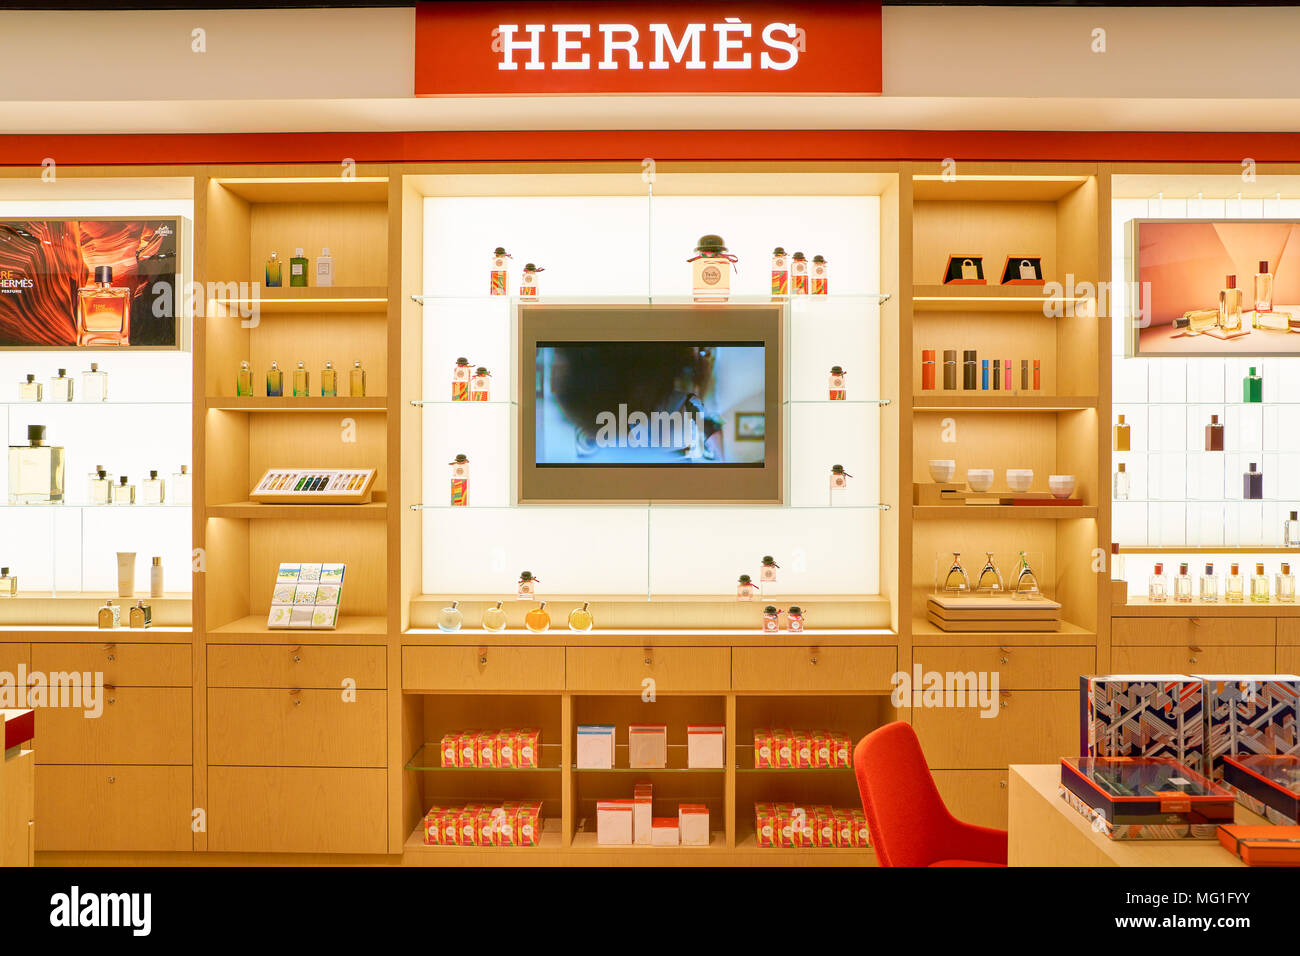 hermes perfume shop